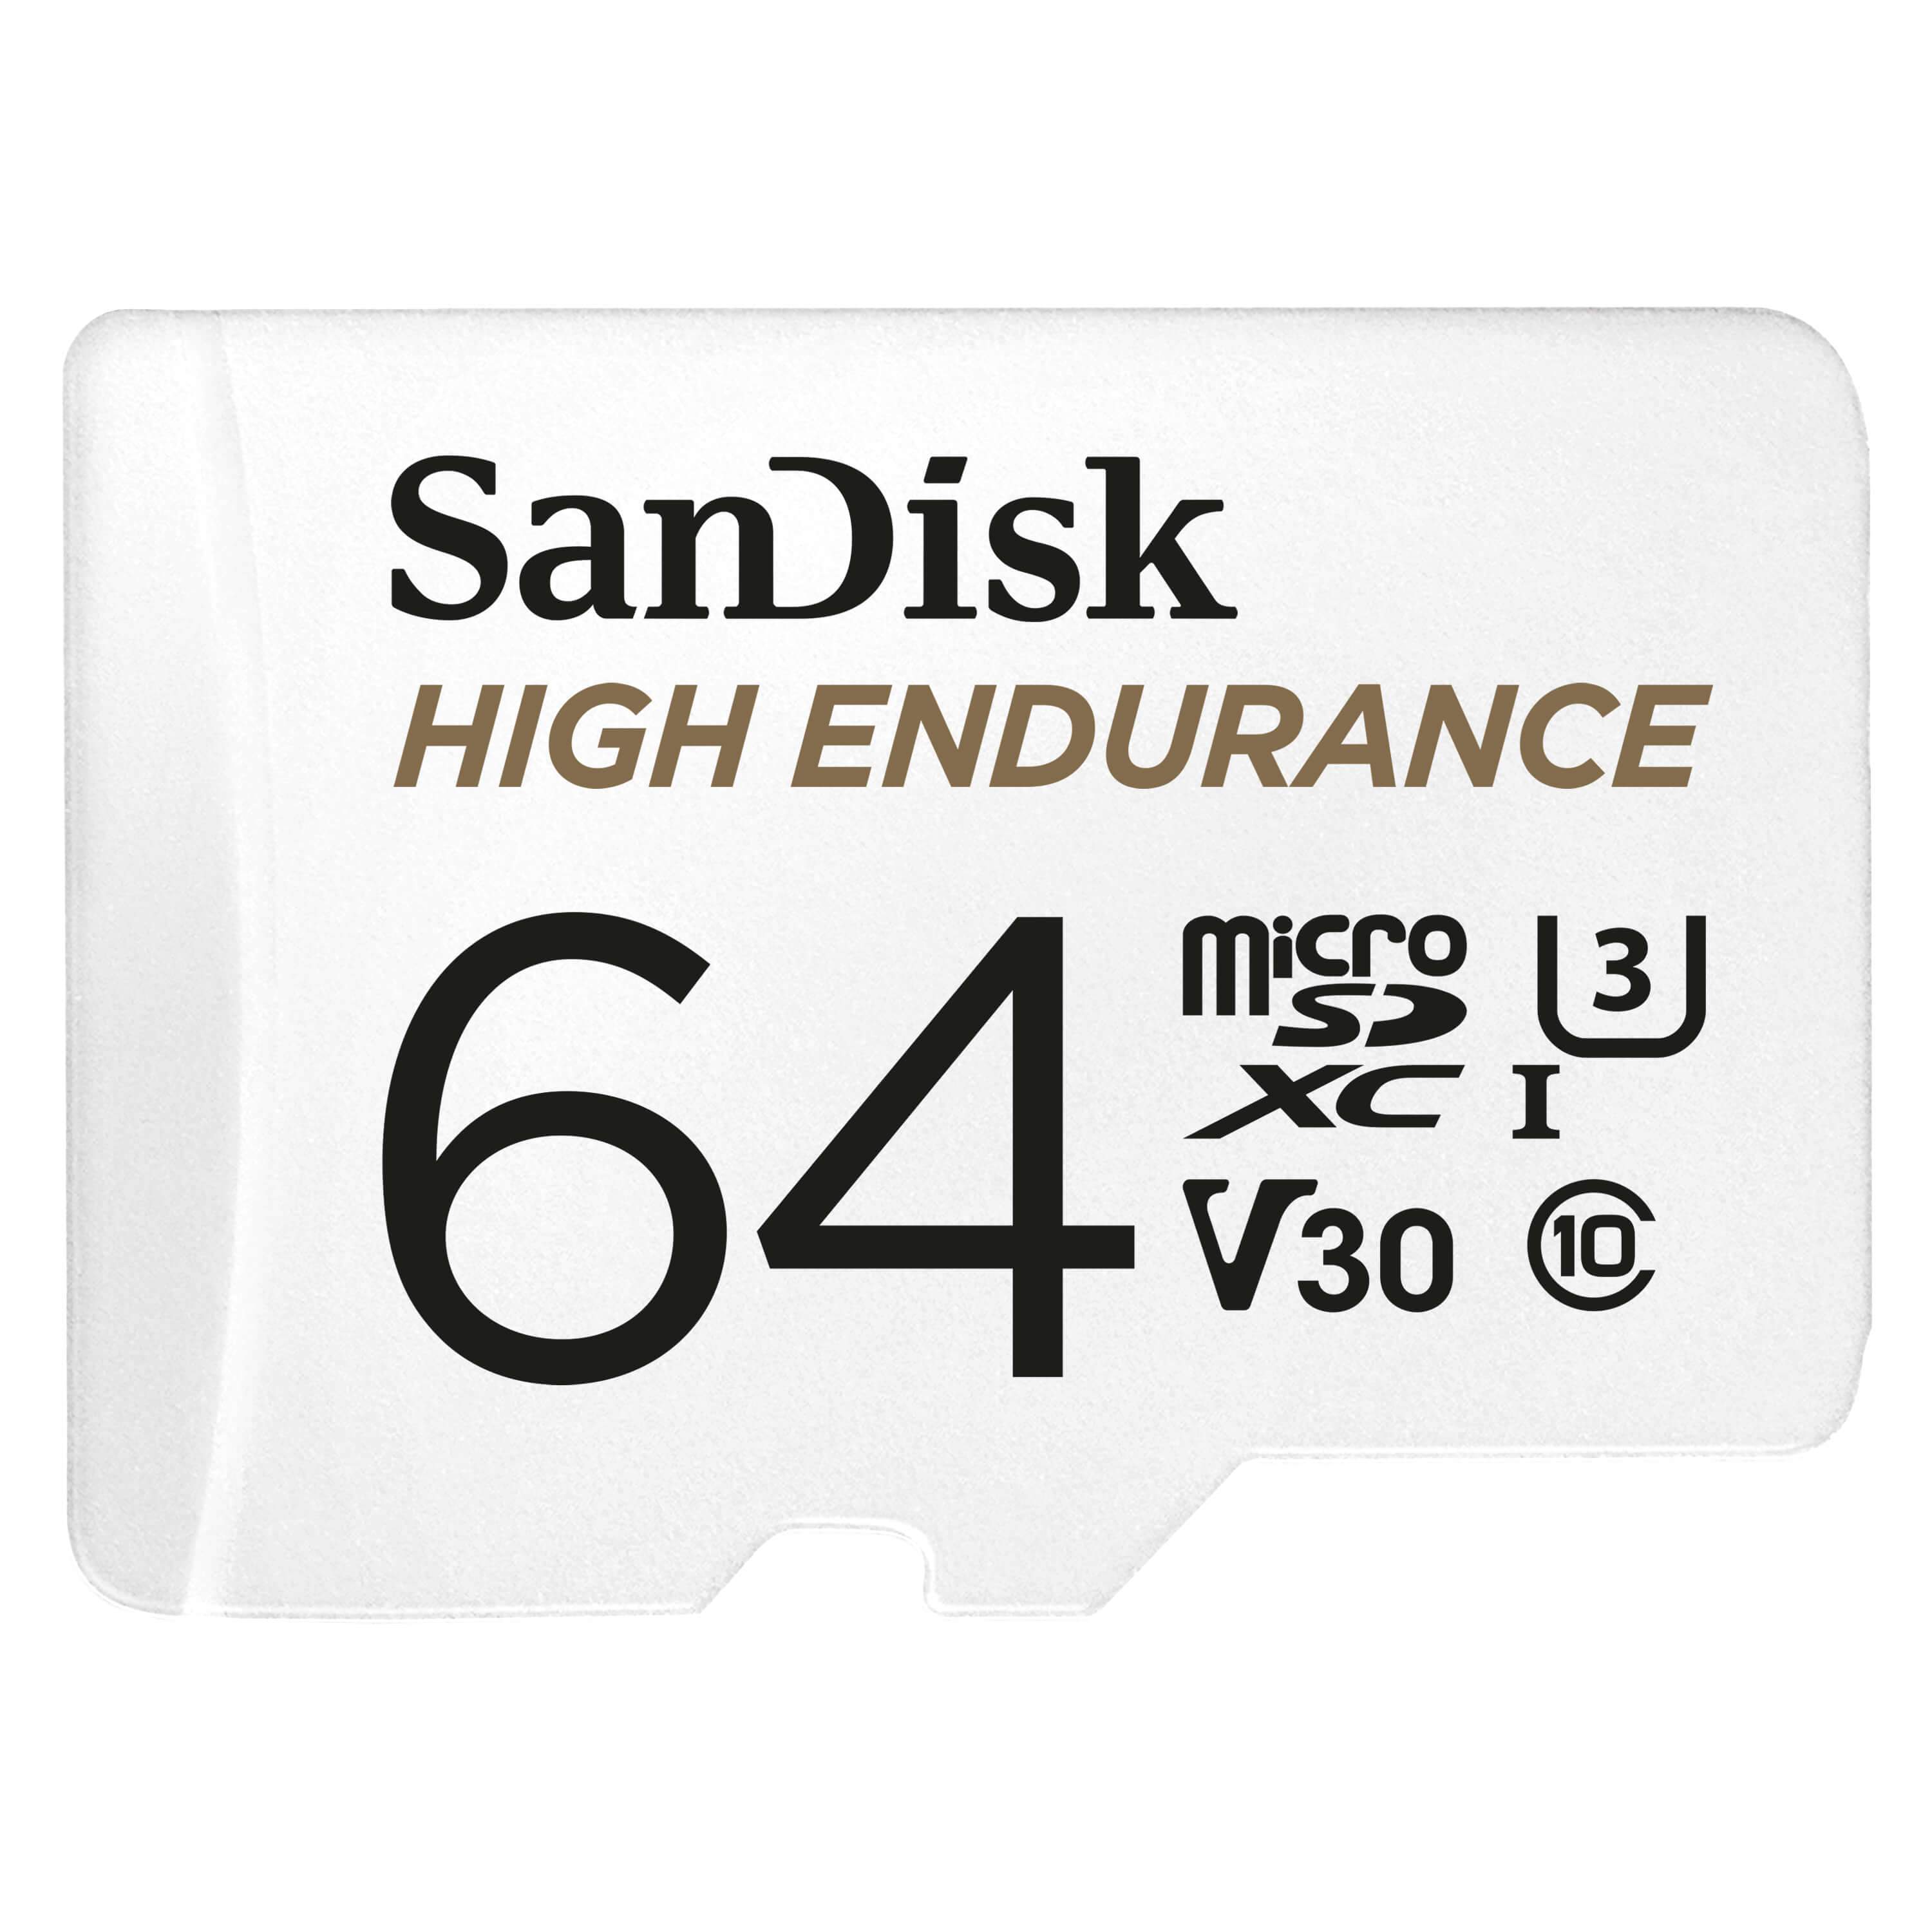 middag Bij zonsopgang Ministerie Sandisk High Endurance Micro SD-kaart 64GB - VIOFO Benelux